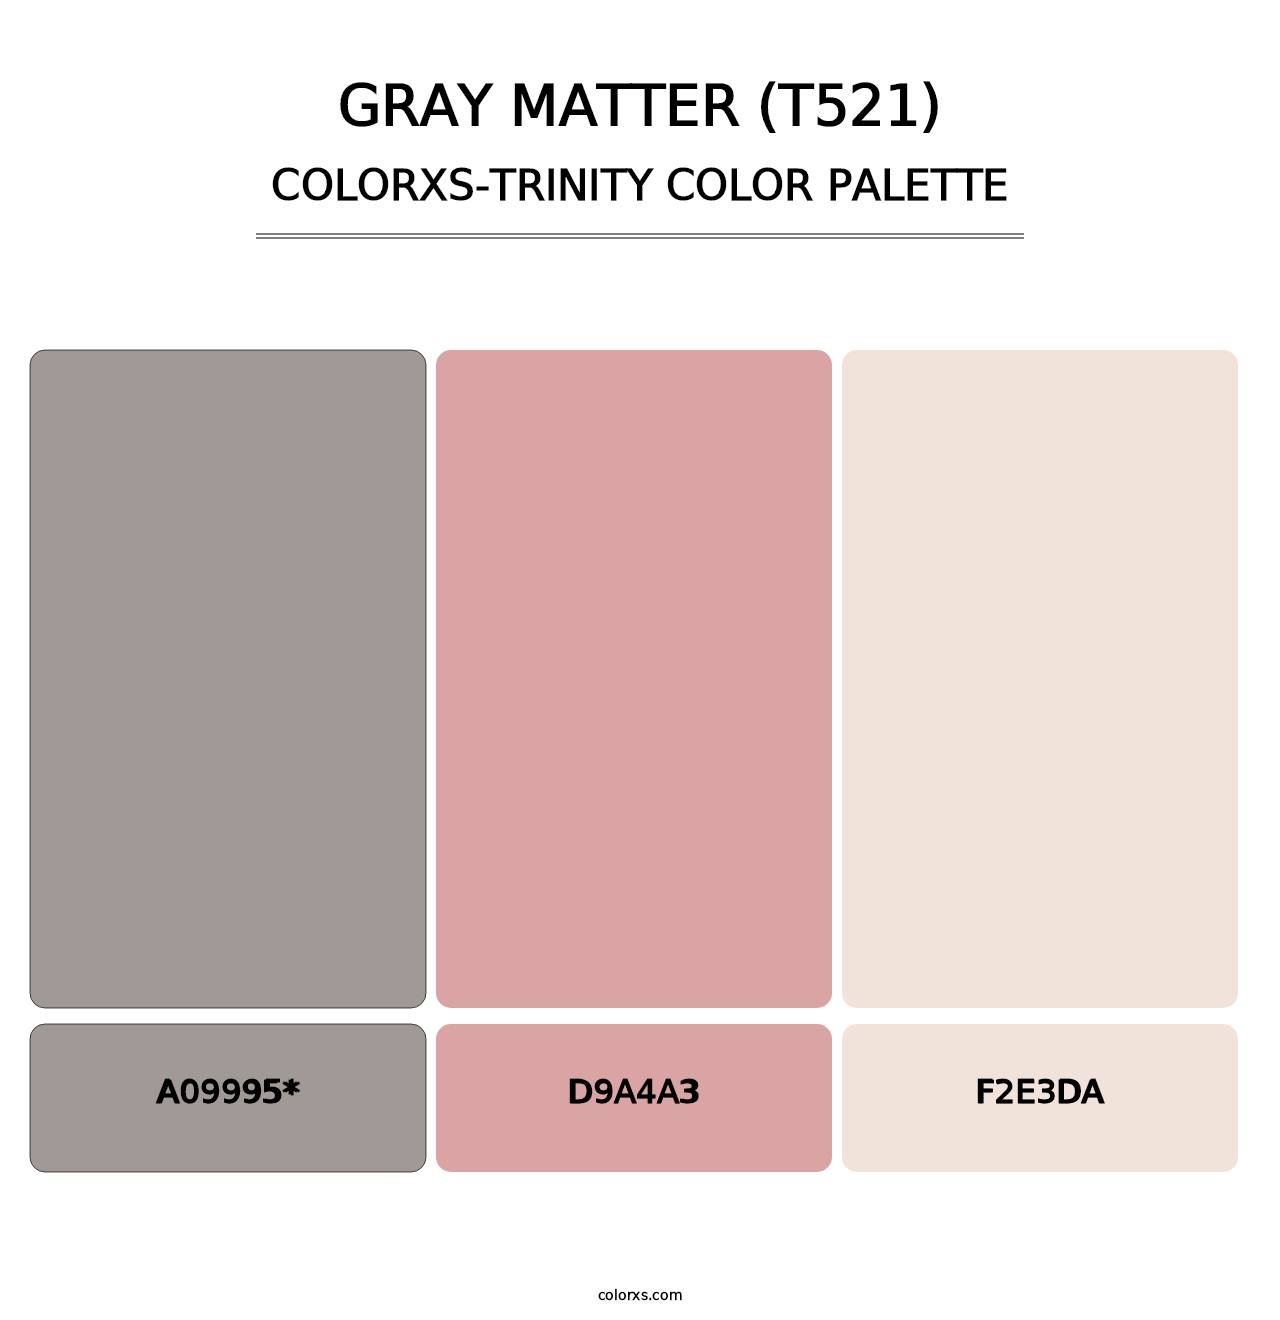 Gray Matter (T521) - Colorxs Trinity Palette